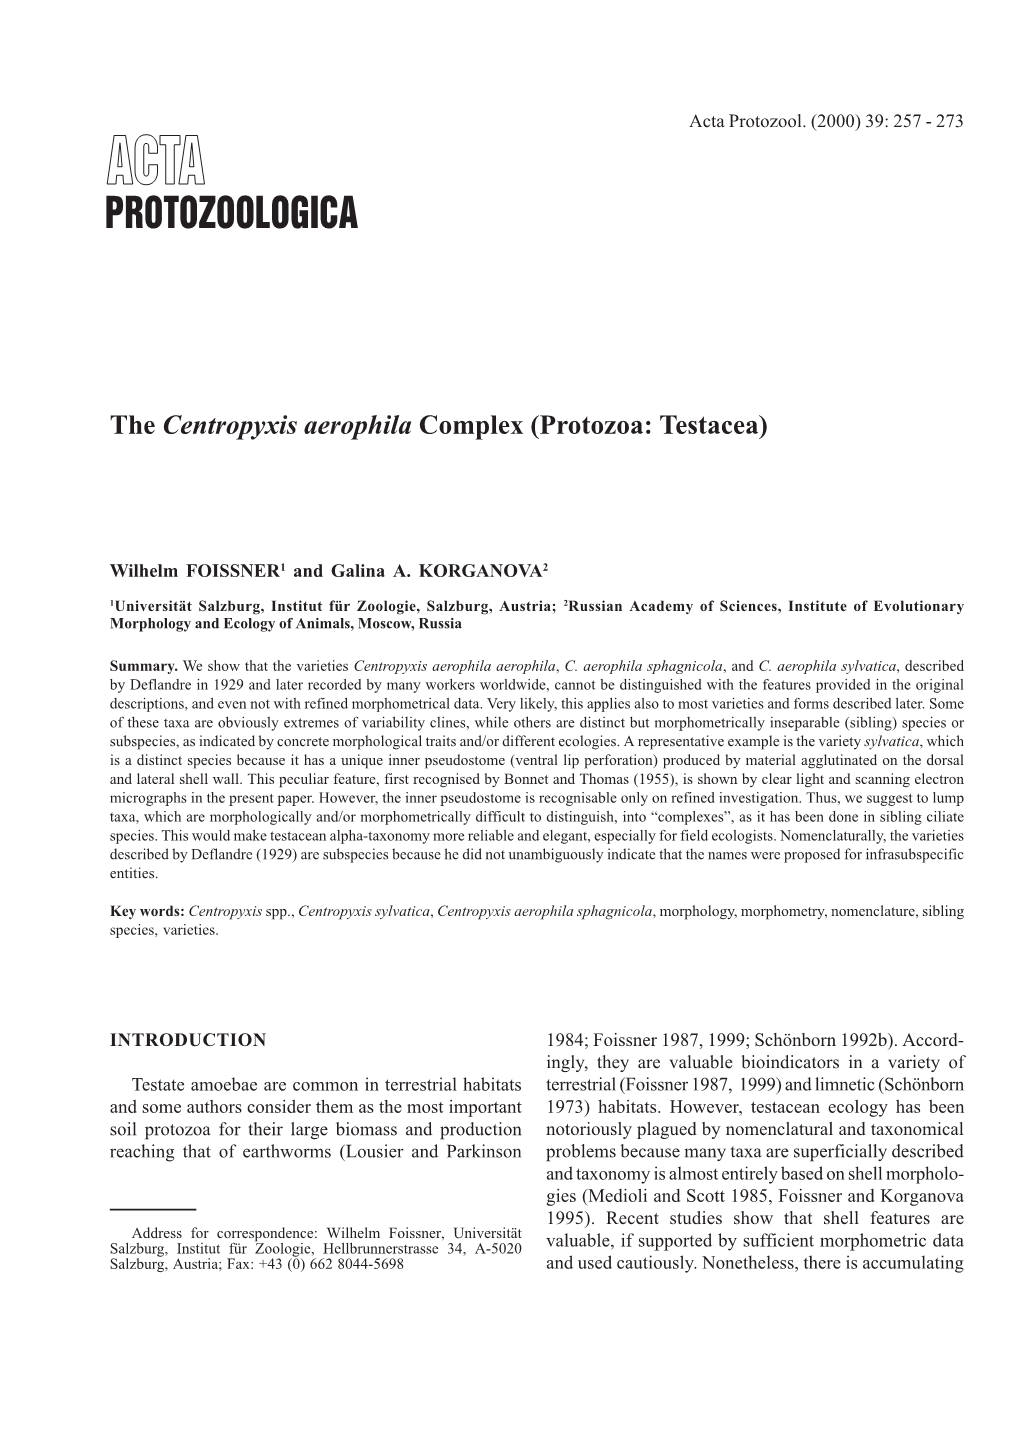 The Centropyxis Aerophila Complex (Protozoa: Testacea)